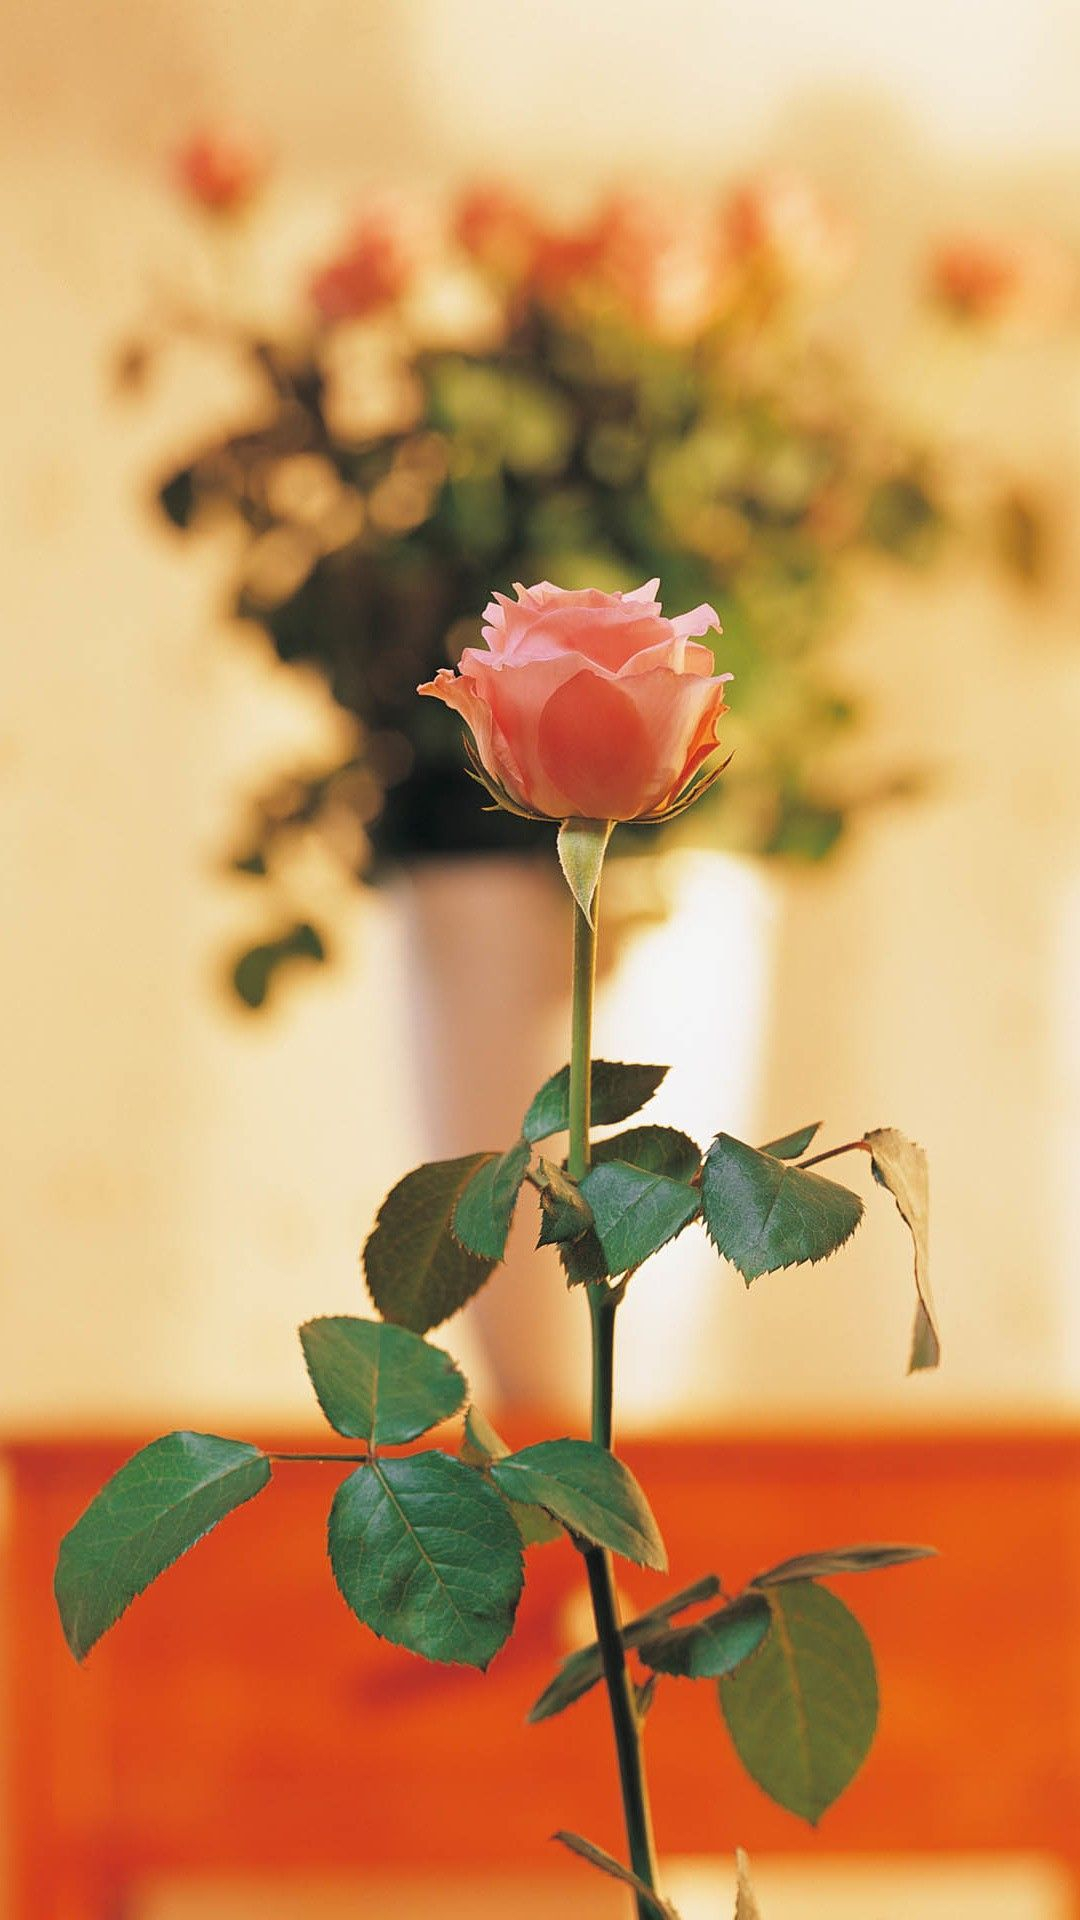 1080x1920 Pure Elegant Pink Rose Vase Bokeh Blurry #iPhone #6 #plus #wallpaper | Flower wallpaper, Rose vase, Flower pictures